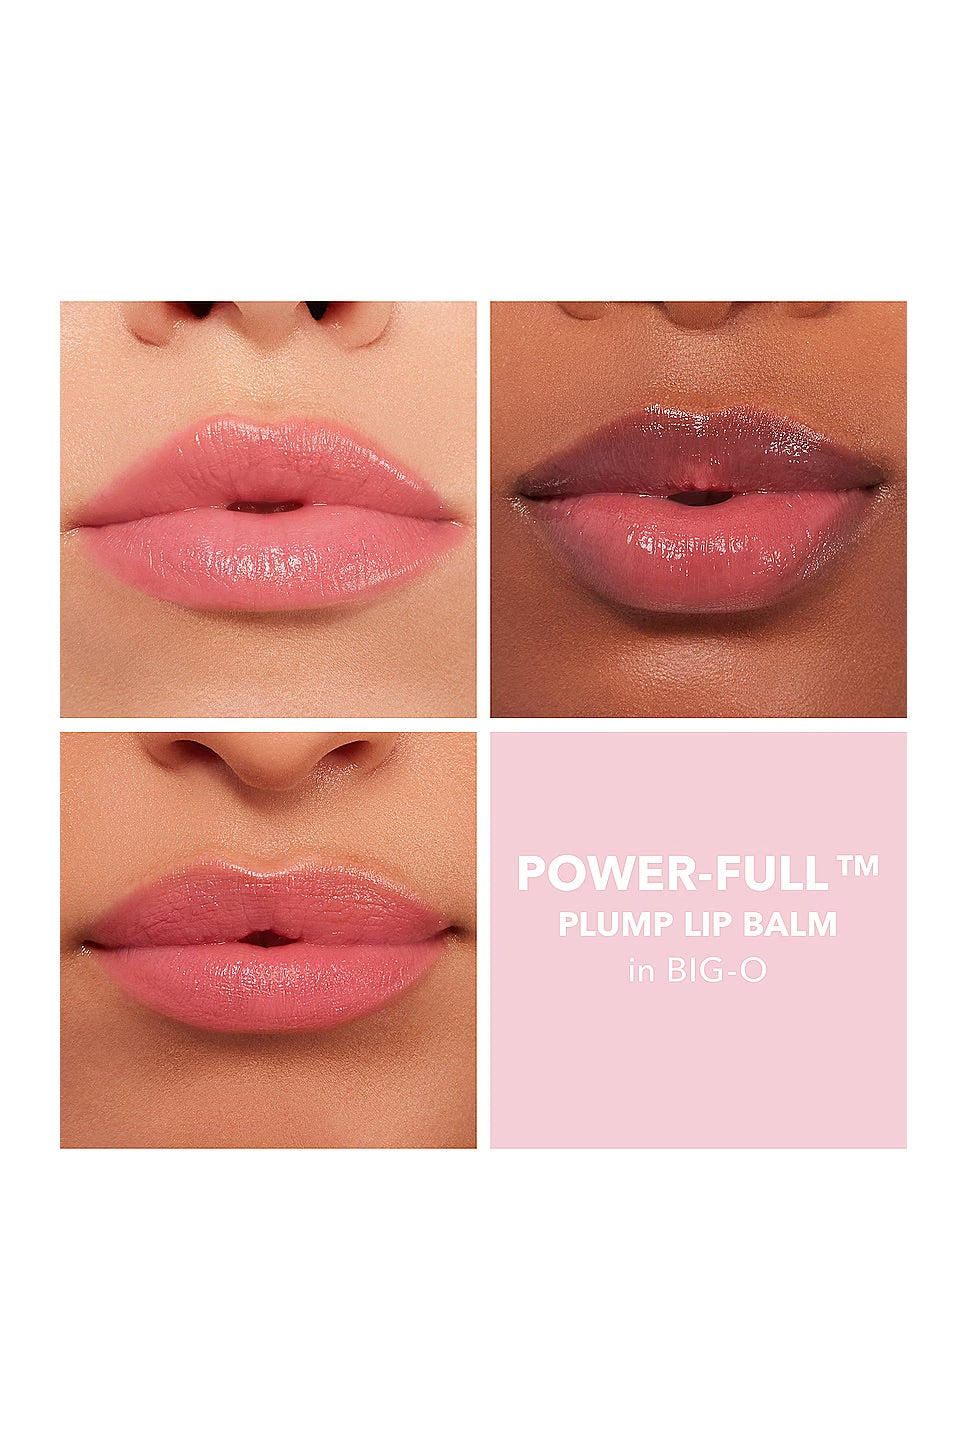 Buxom - Power Full Plump Lip Balm - Big O